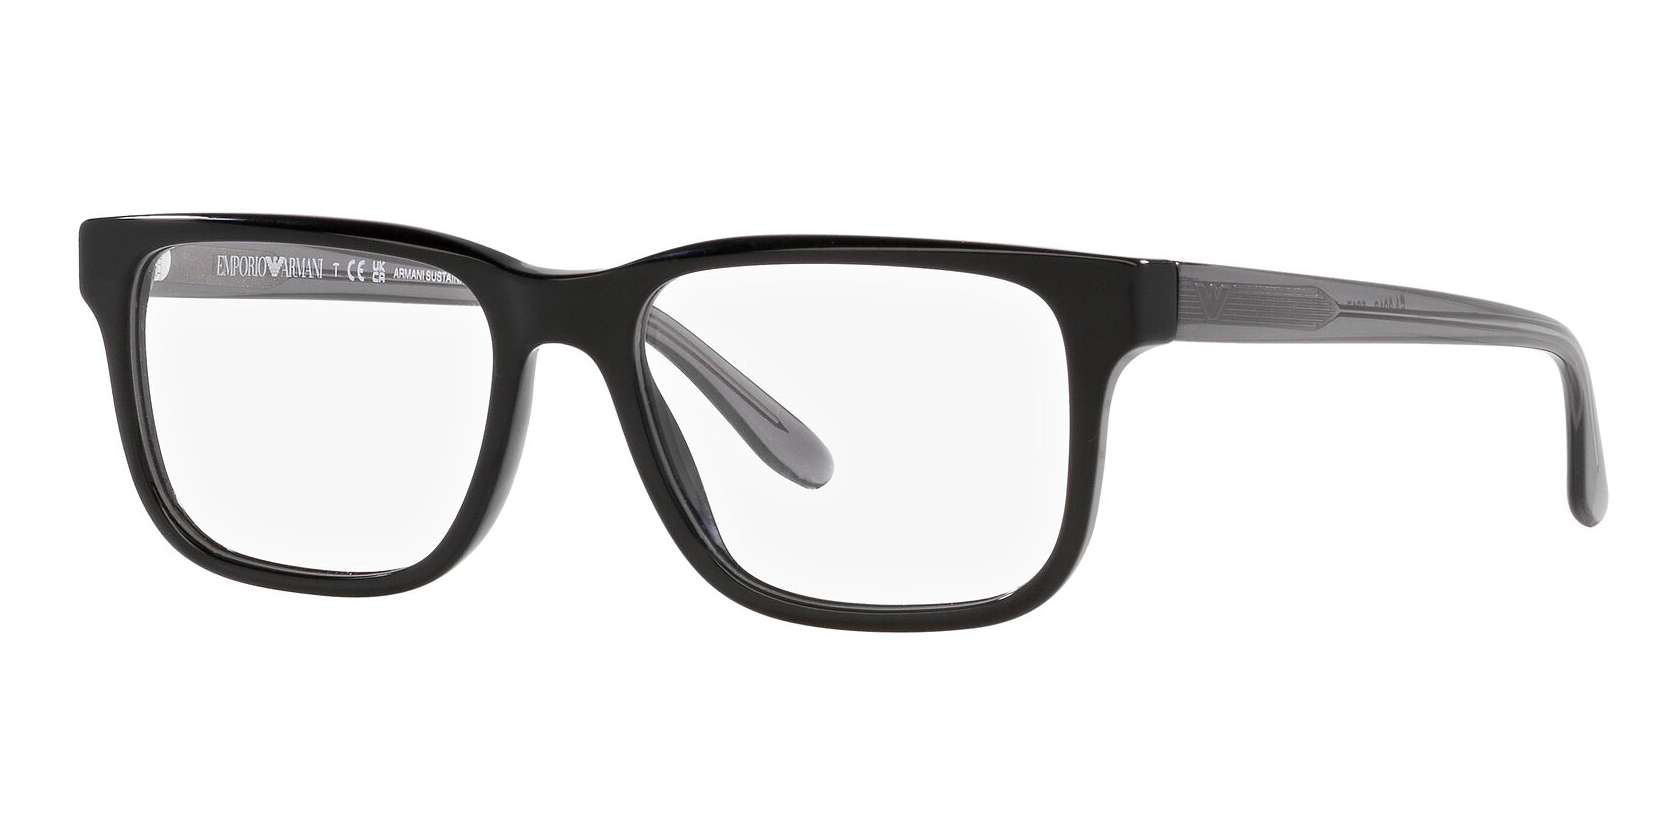 Armani briller - ea3218 fra Emporio Armani - Svart - Acetate - Rektangulær - Large